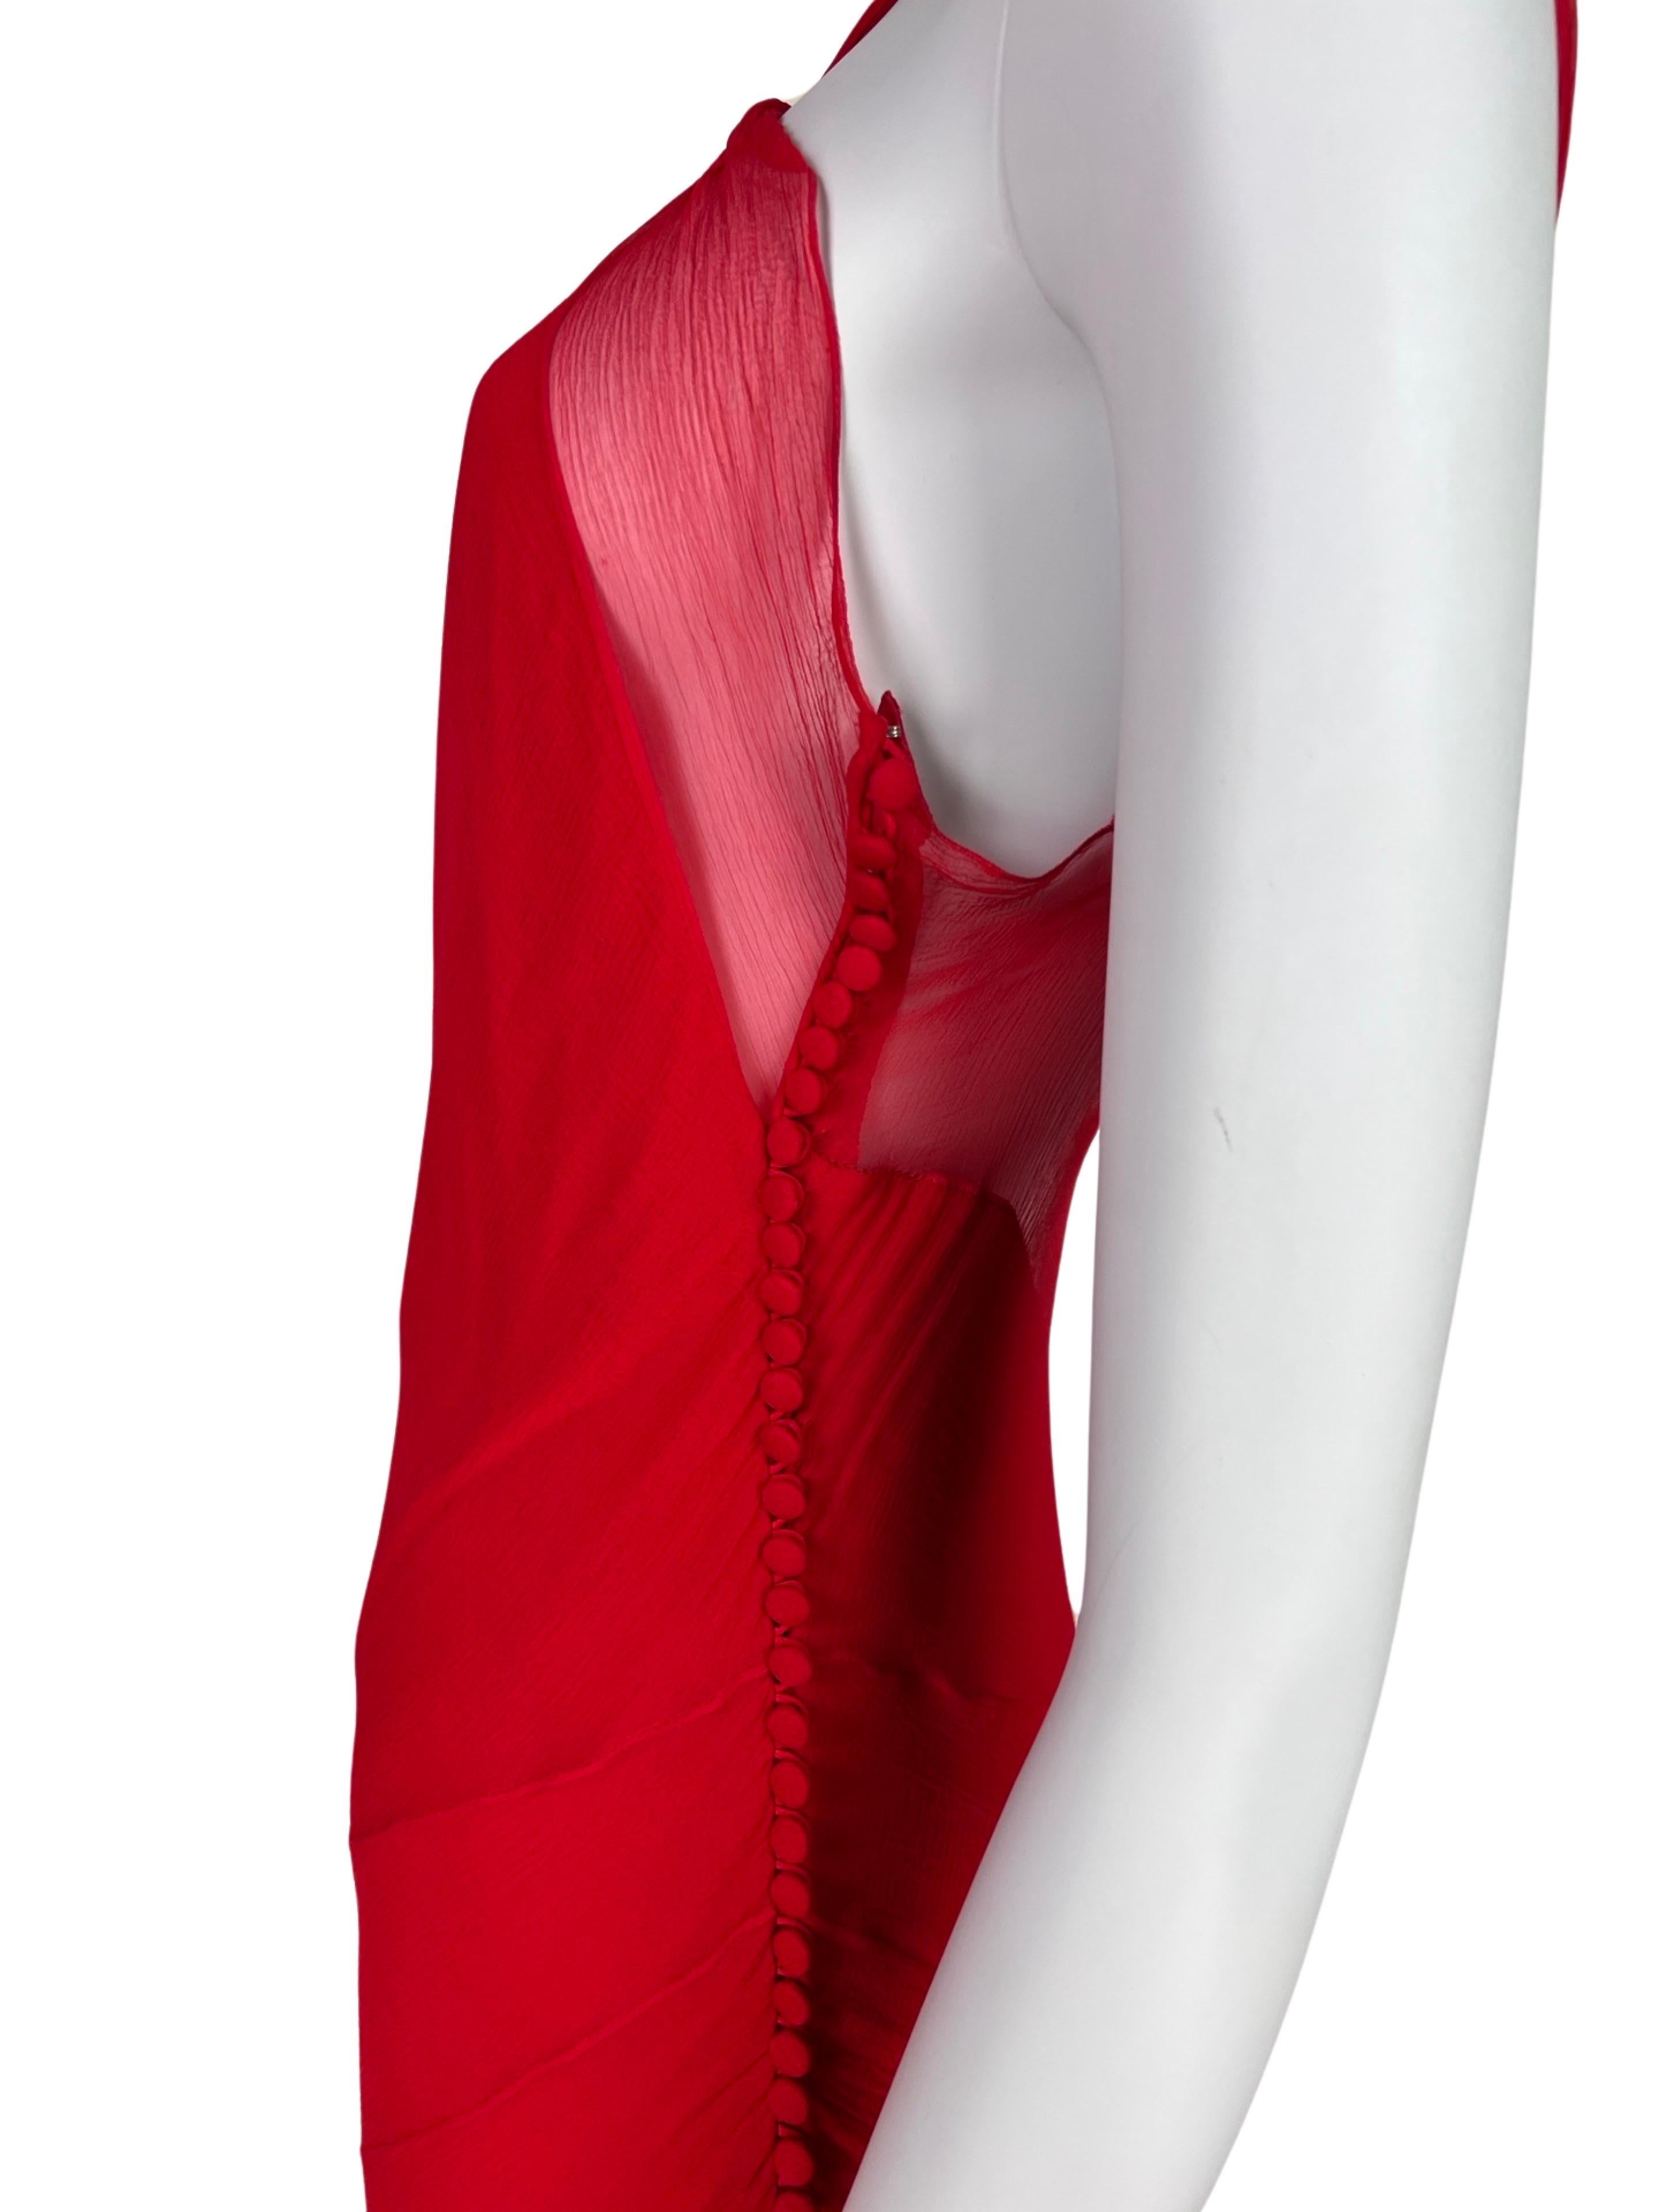 Dior by John Galliano Spring 2004 Red Bias Cut Silk Chiffon Dress 1